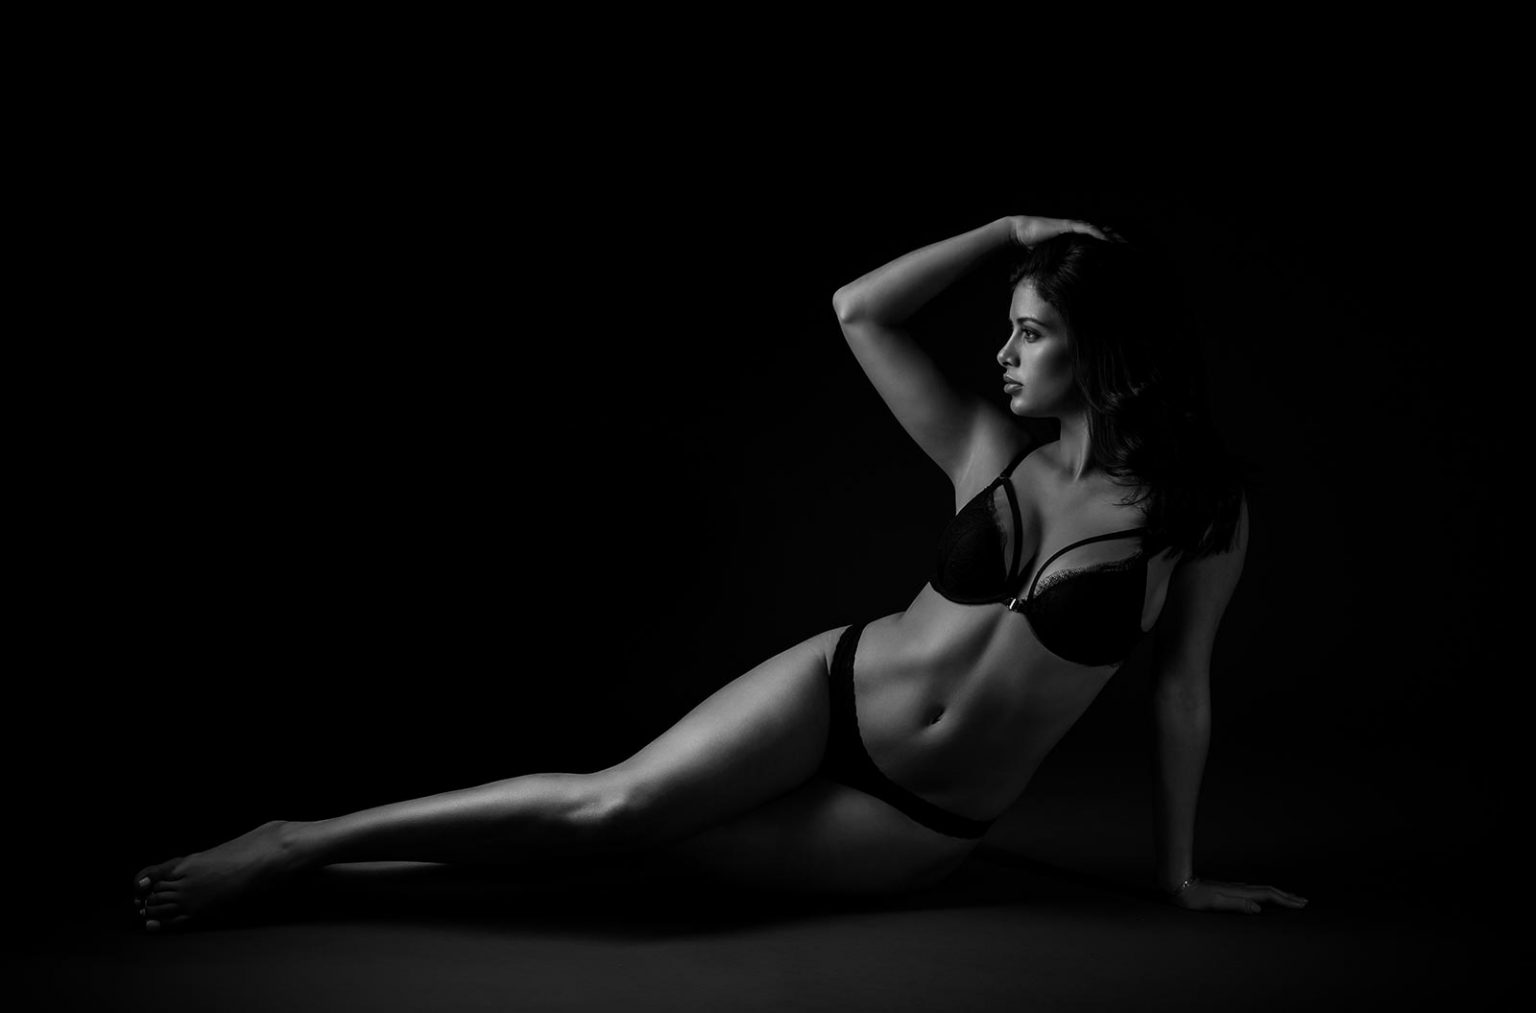 Woman in lingeries posing at a dark NYC photo studio